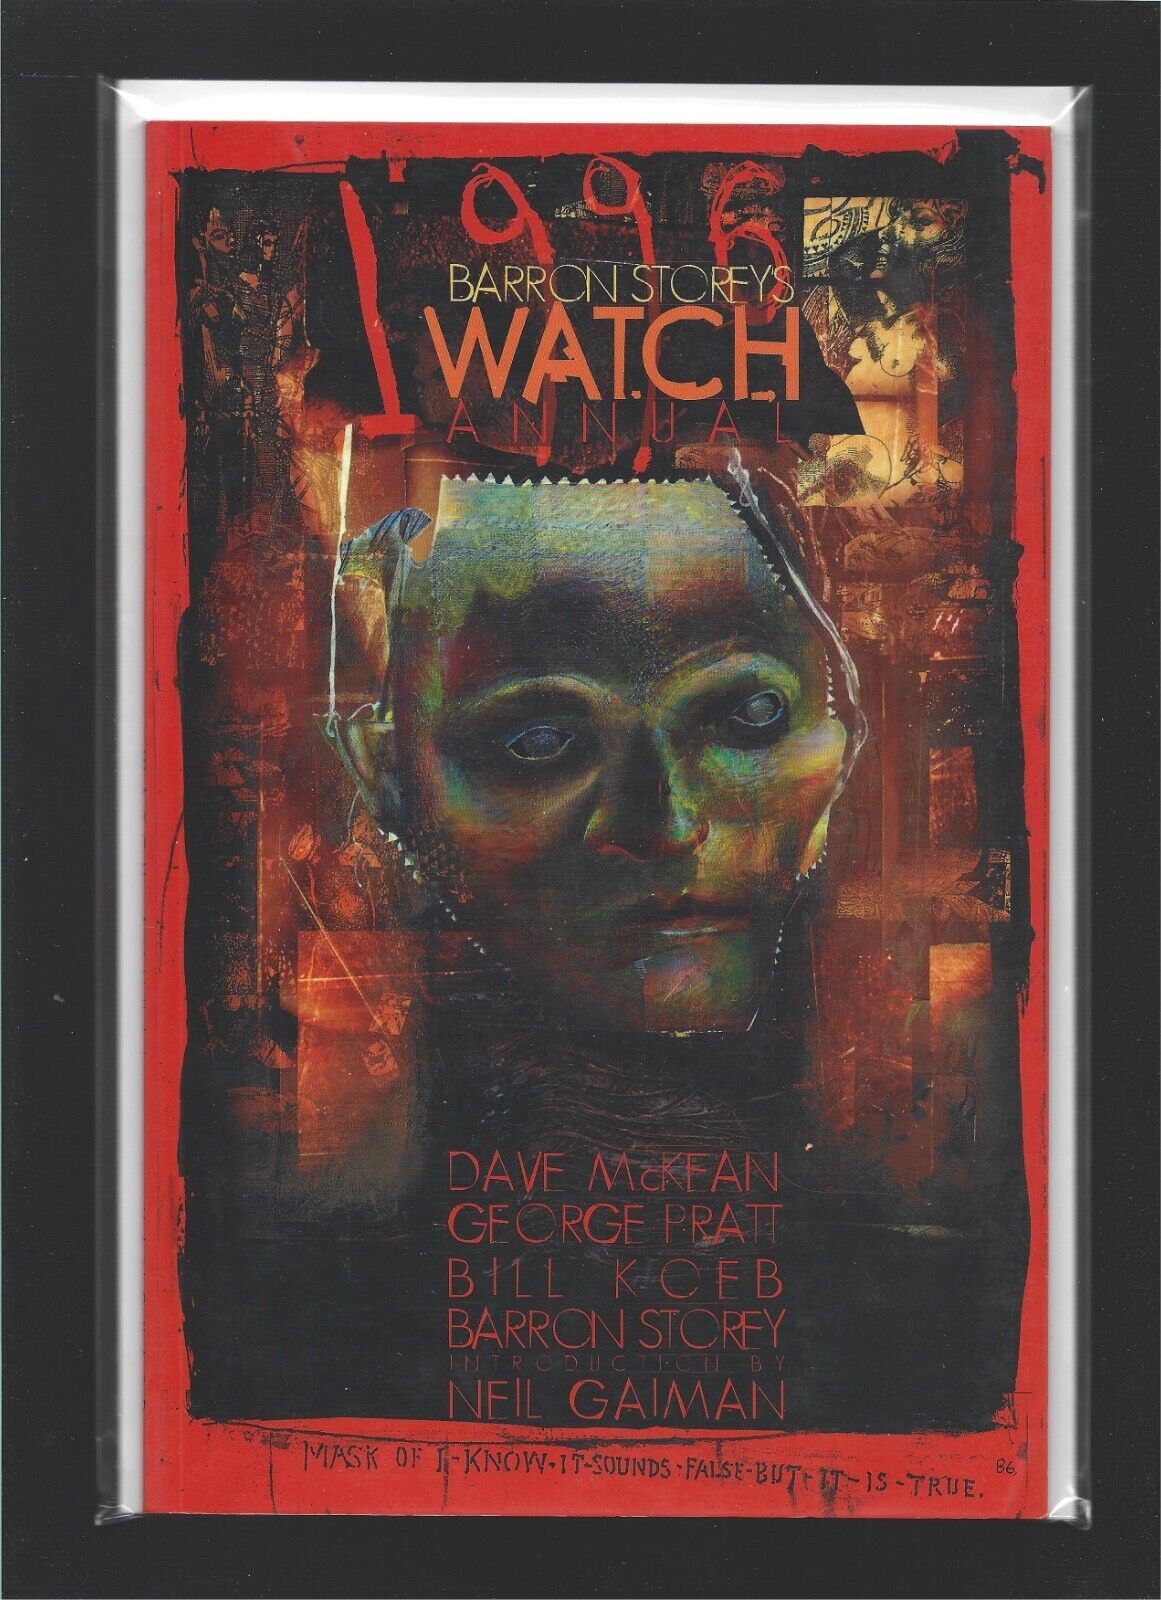 Barron Storeys 1996 Watch Annual / Vanguard / Neil Gaiman Dave McKean